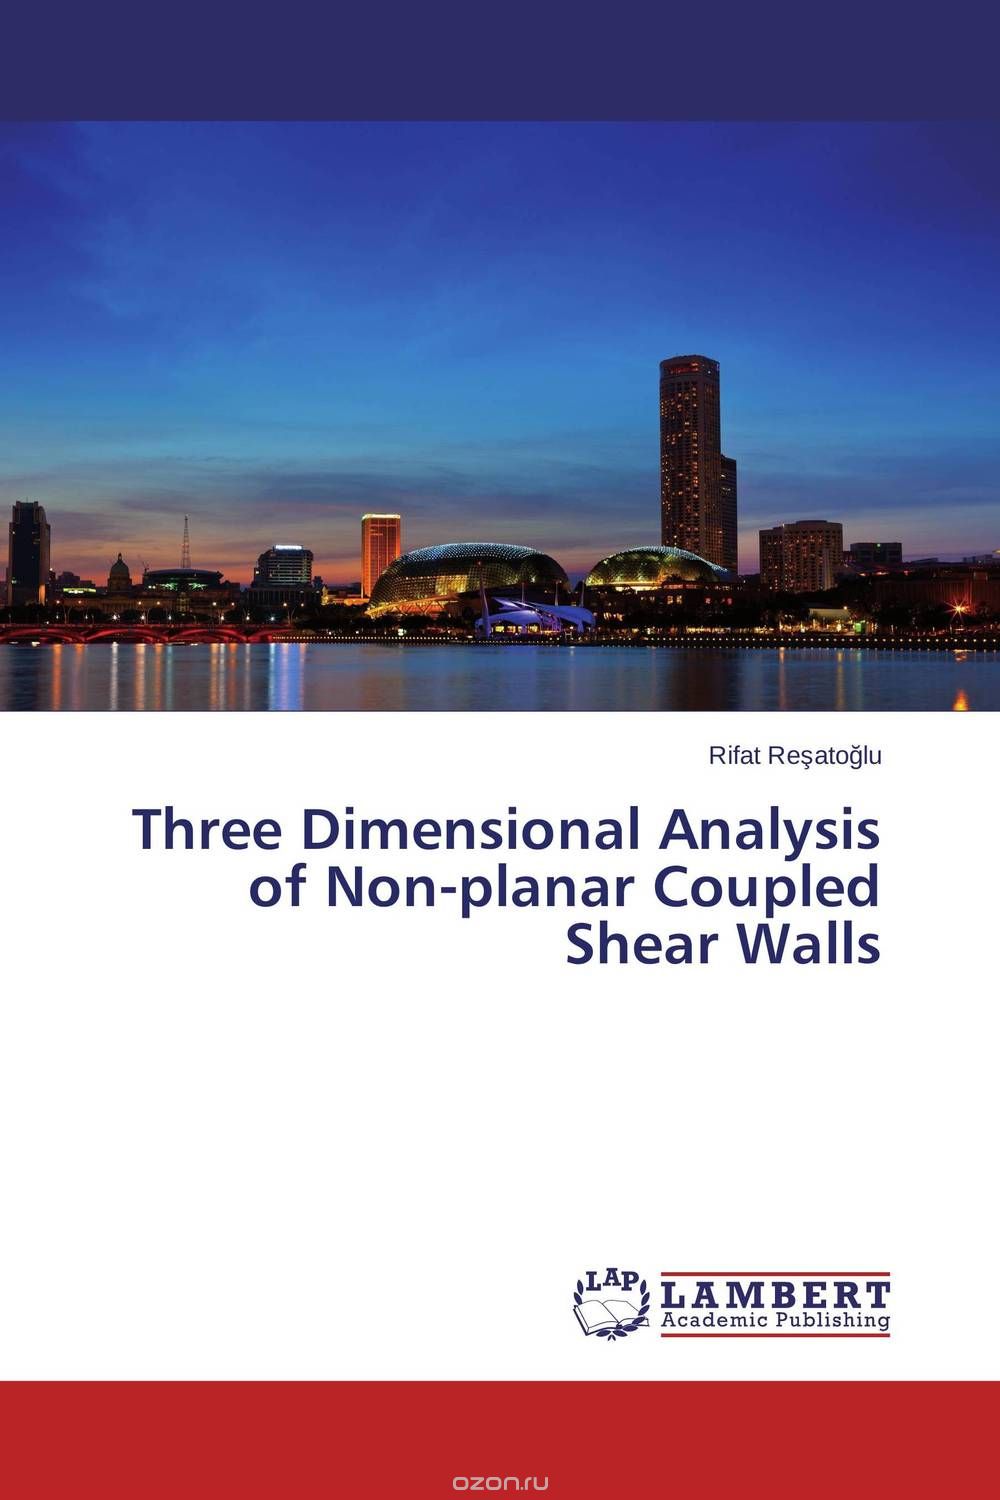 Скачать книгу "Three Dimensional Analysis of Non-planar Coupled Shear Walls"